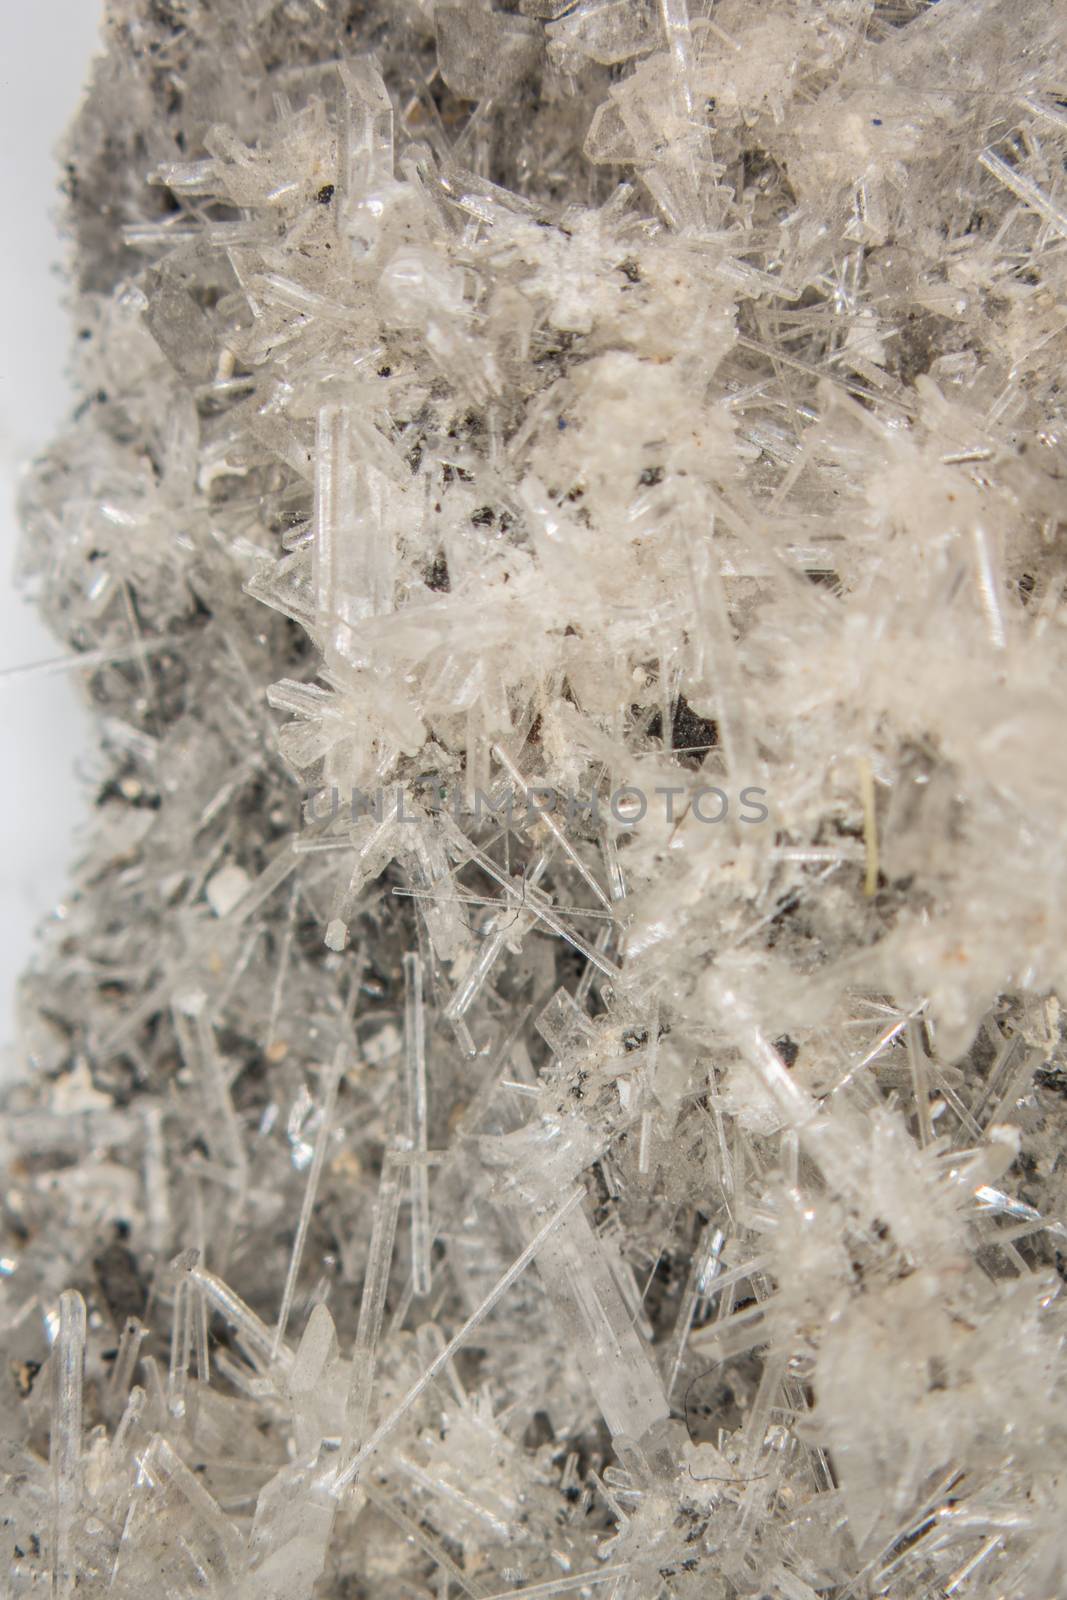 Selenite crystal needles on rock